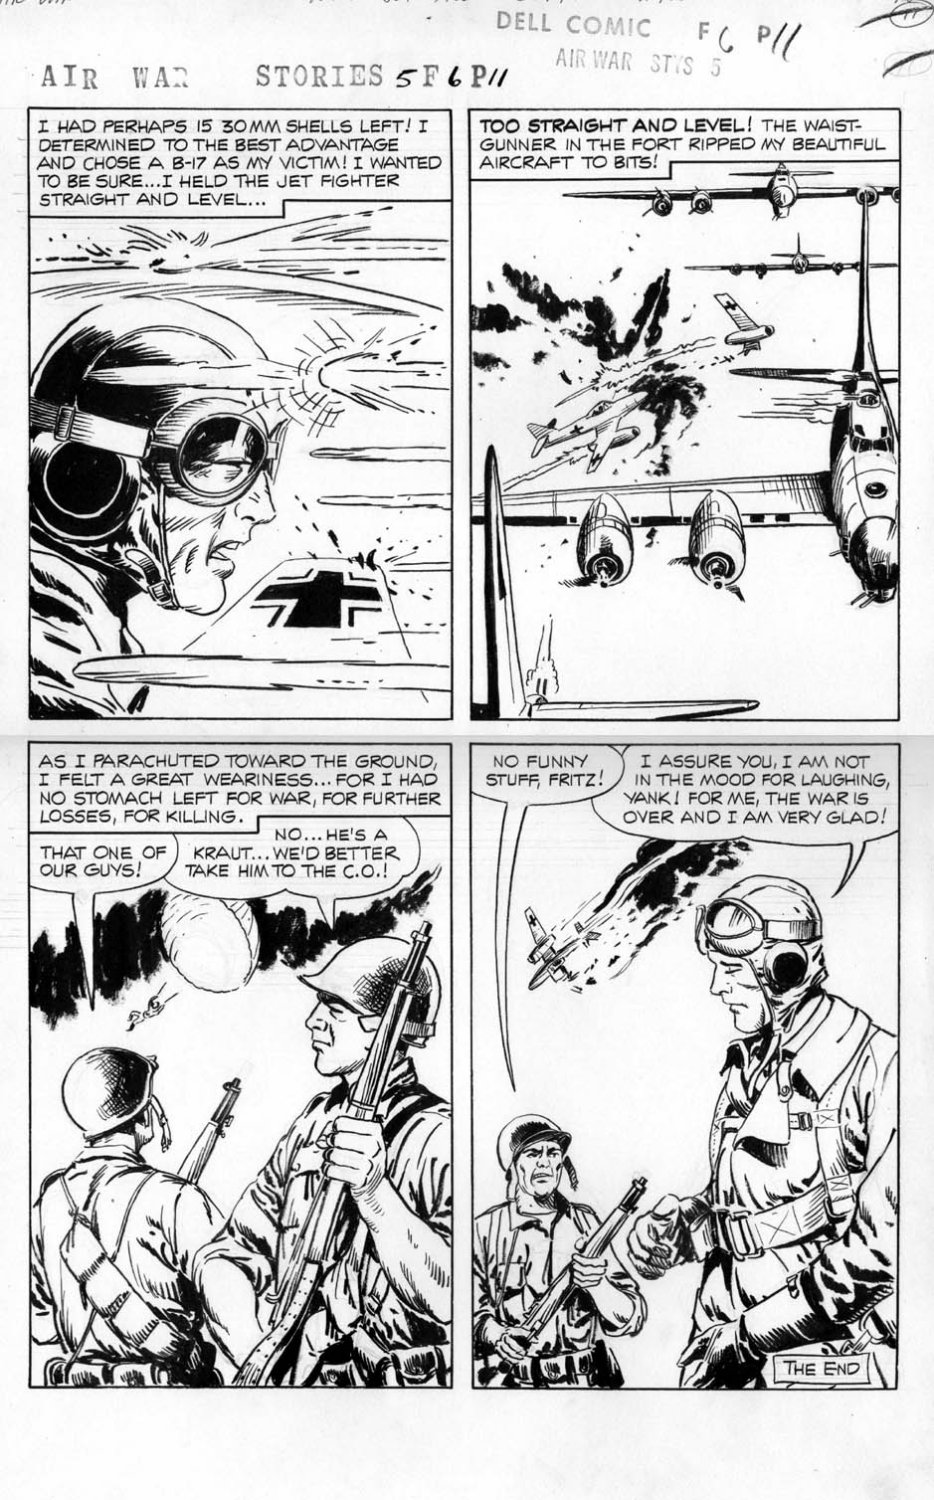 GLAZMAN, SAM - Air War Stories #5 DELL 2-up last pg 11, parachute to safety,  in Stephen Donnelly's GLAZMAN, SAM - DELL, DC - Kona, War Comic Art Gallery  Room